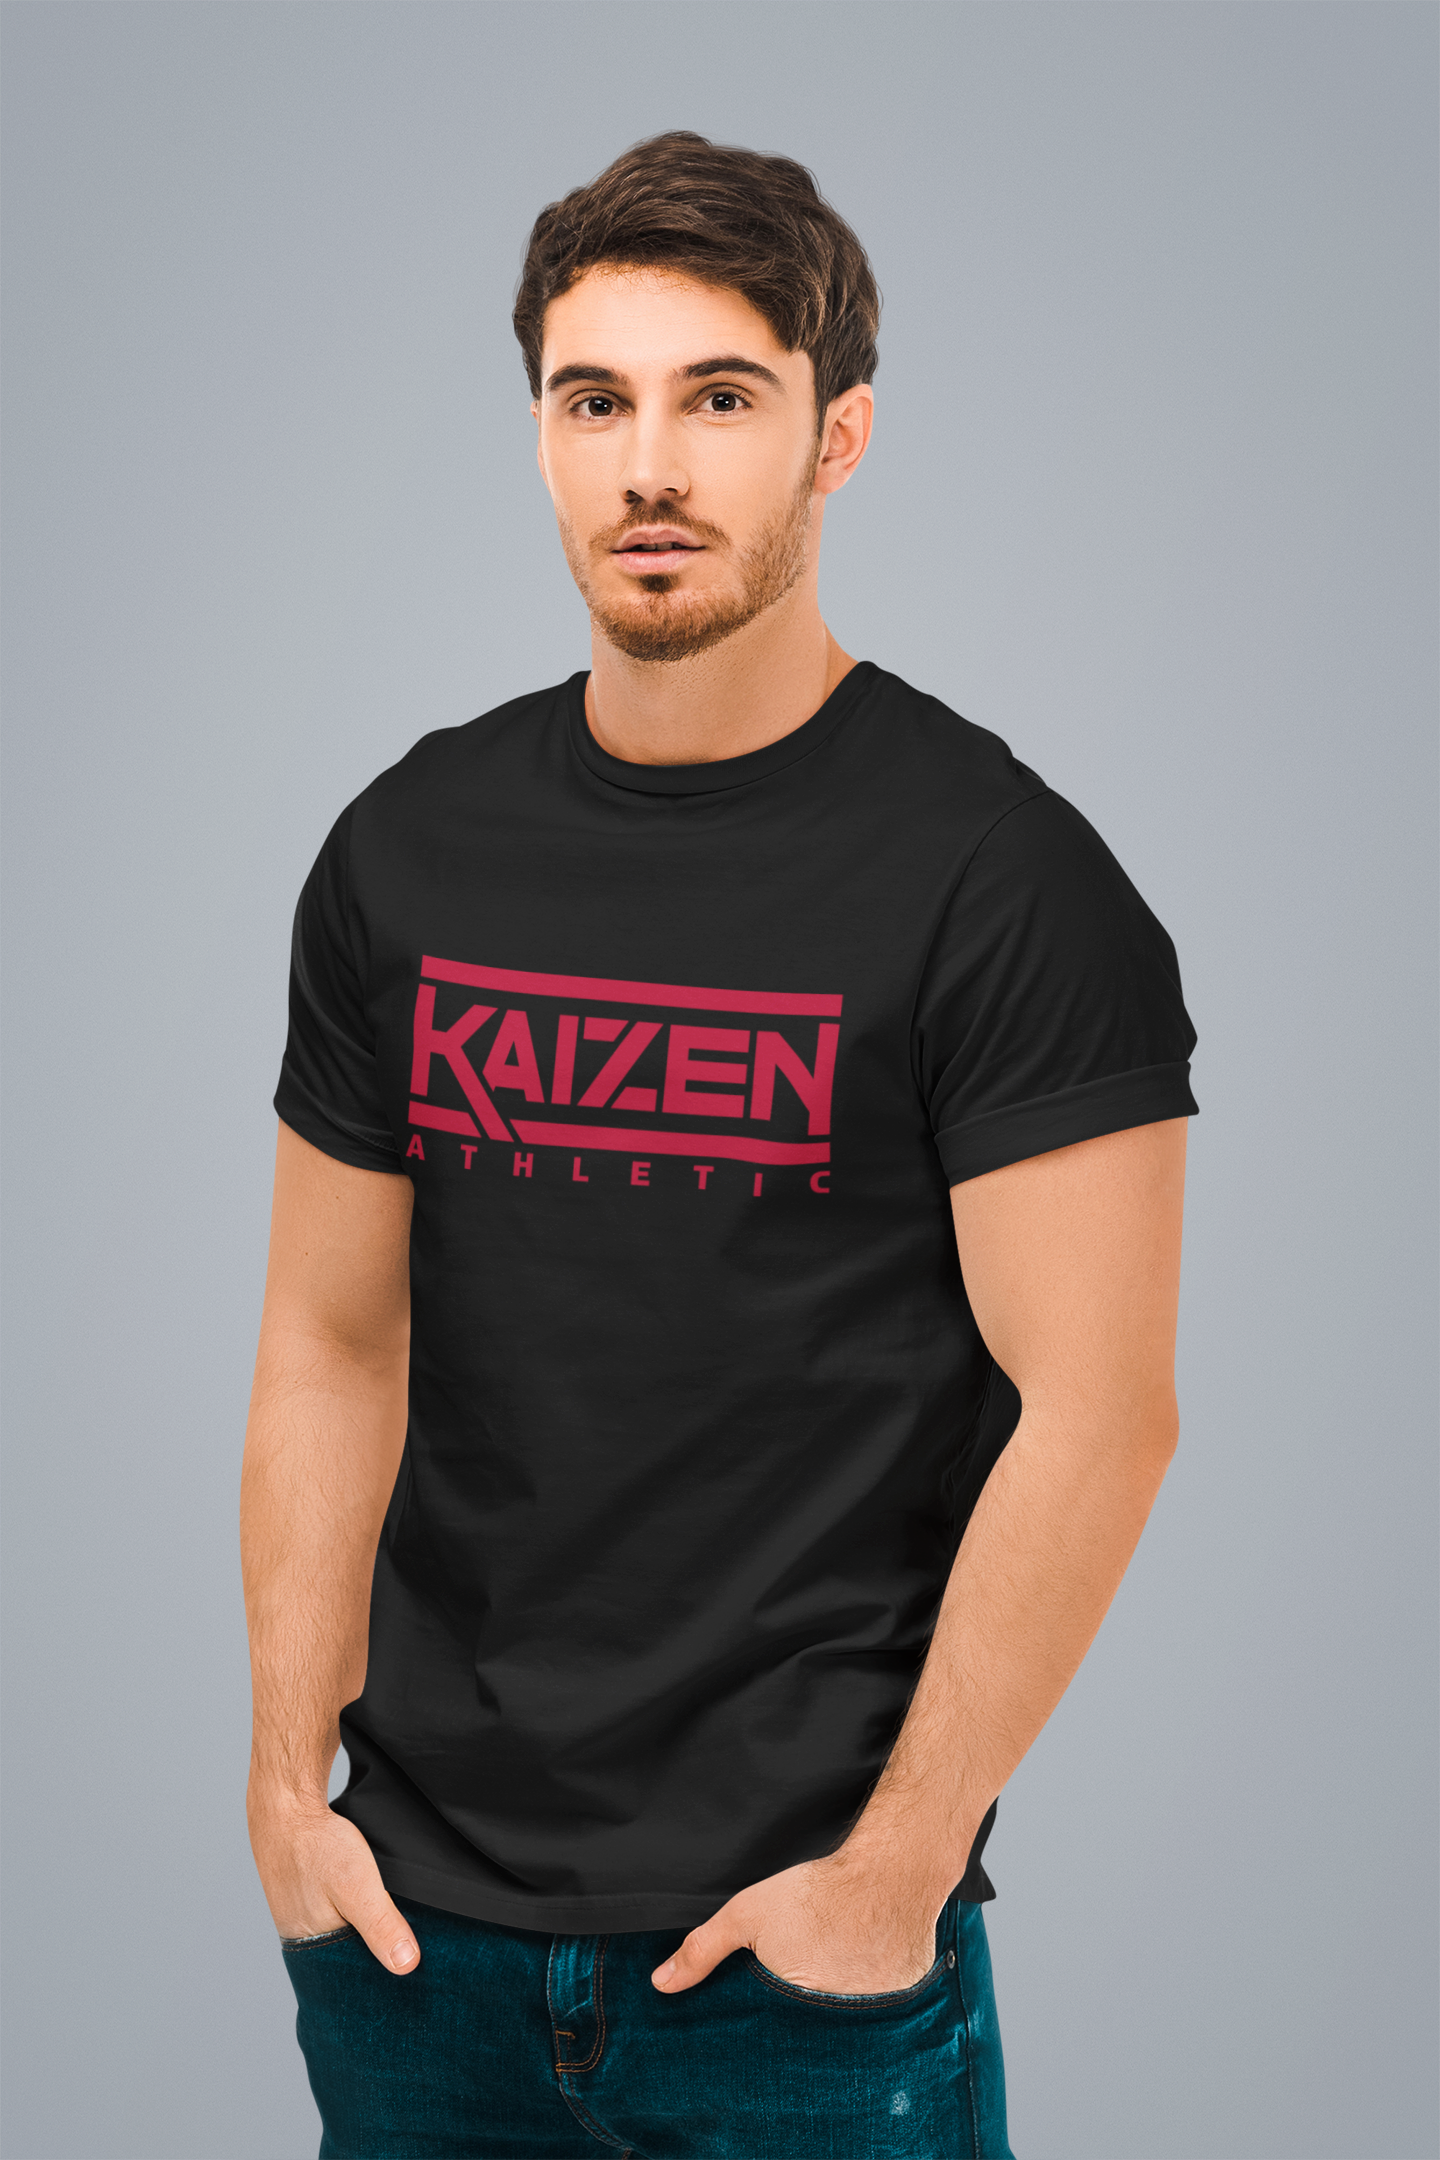 Camiseta unisex de algodón orgánico de Kaizen Athletic